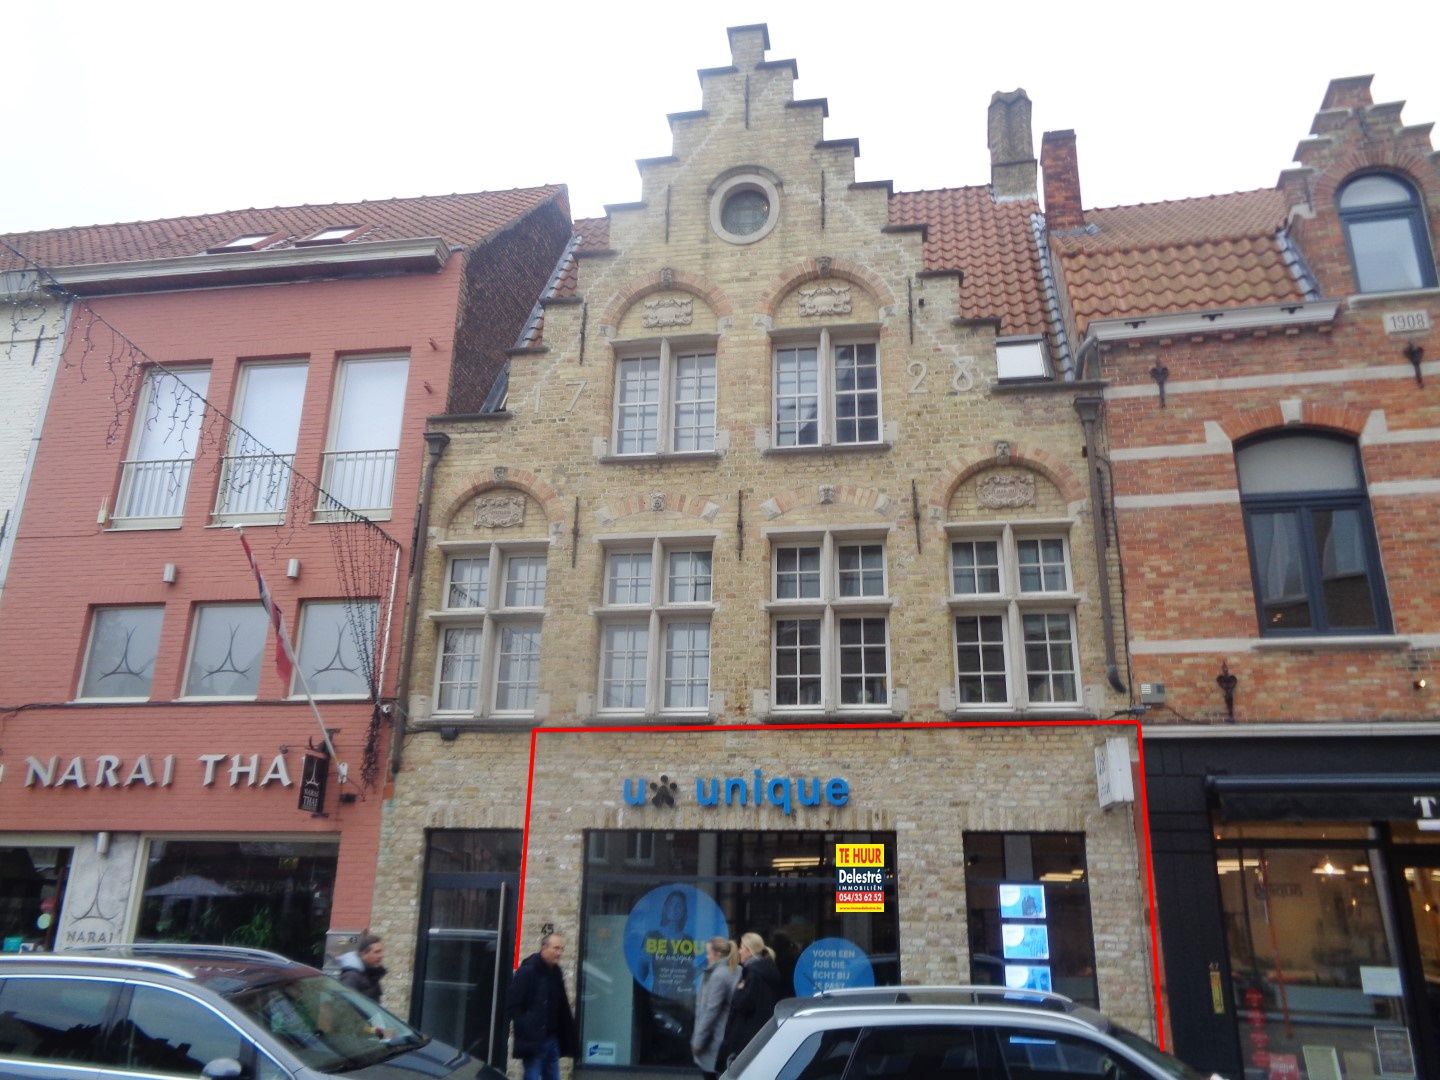 Commerciële ruimte te huur Smedenstraat 45 - 8000 Brugge